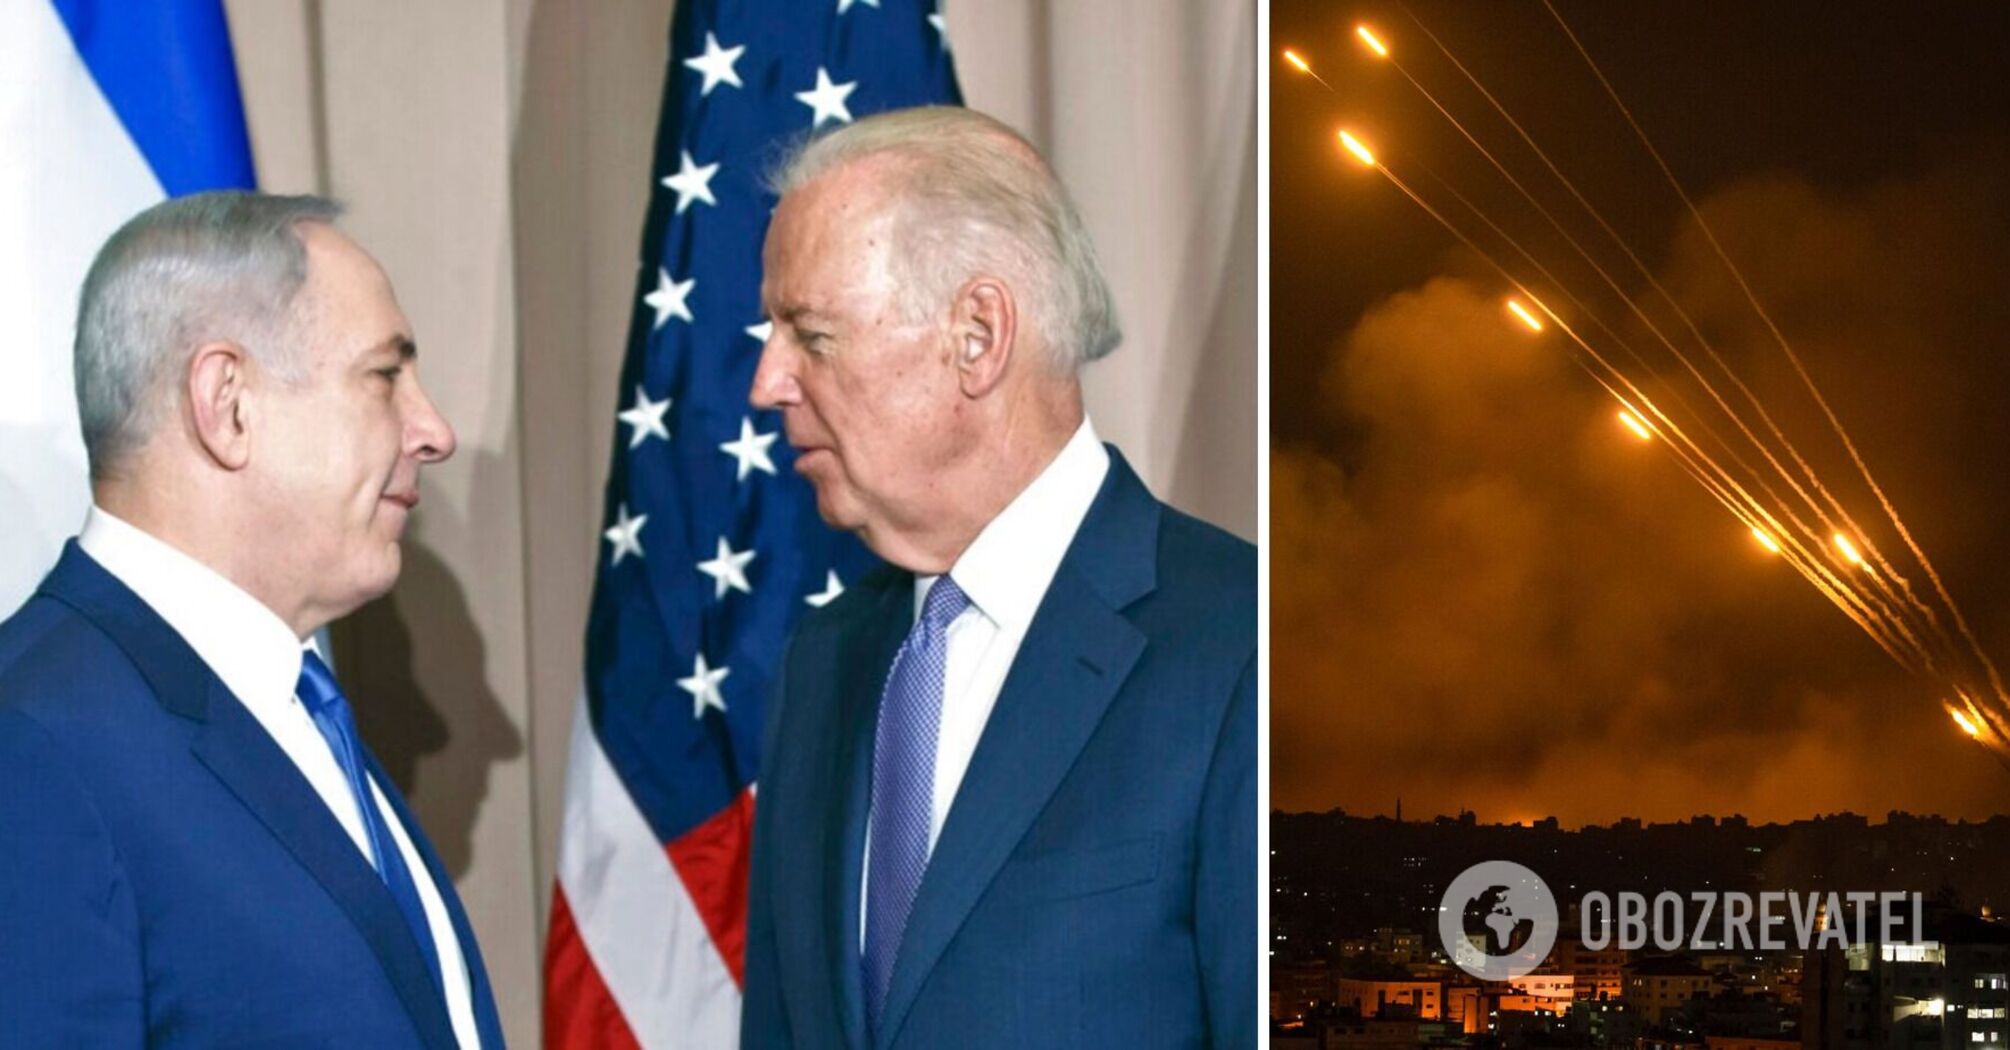 Biden warns Netanyahu that U.S. will not be directly involved in Iran's response - CNN